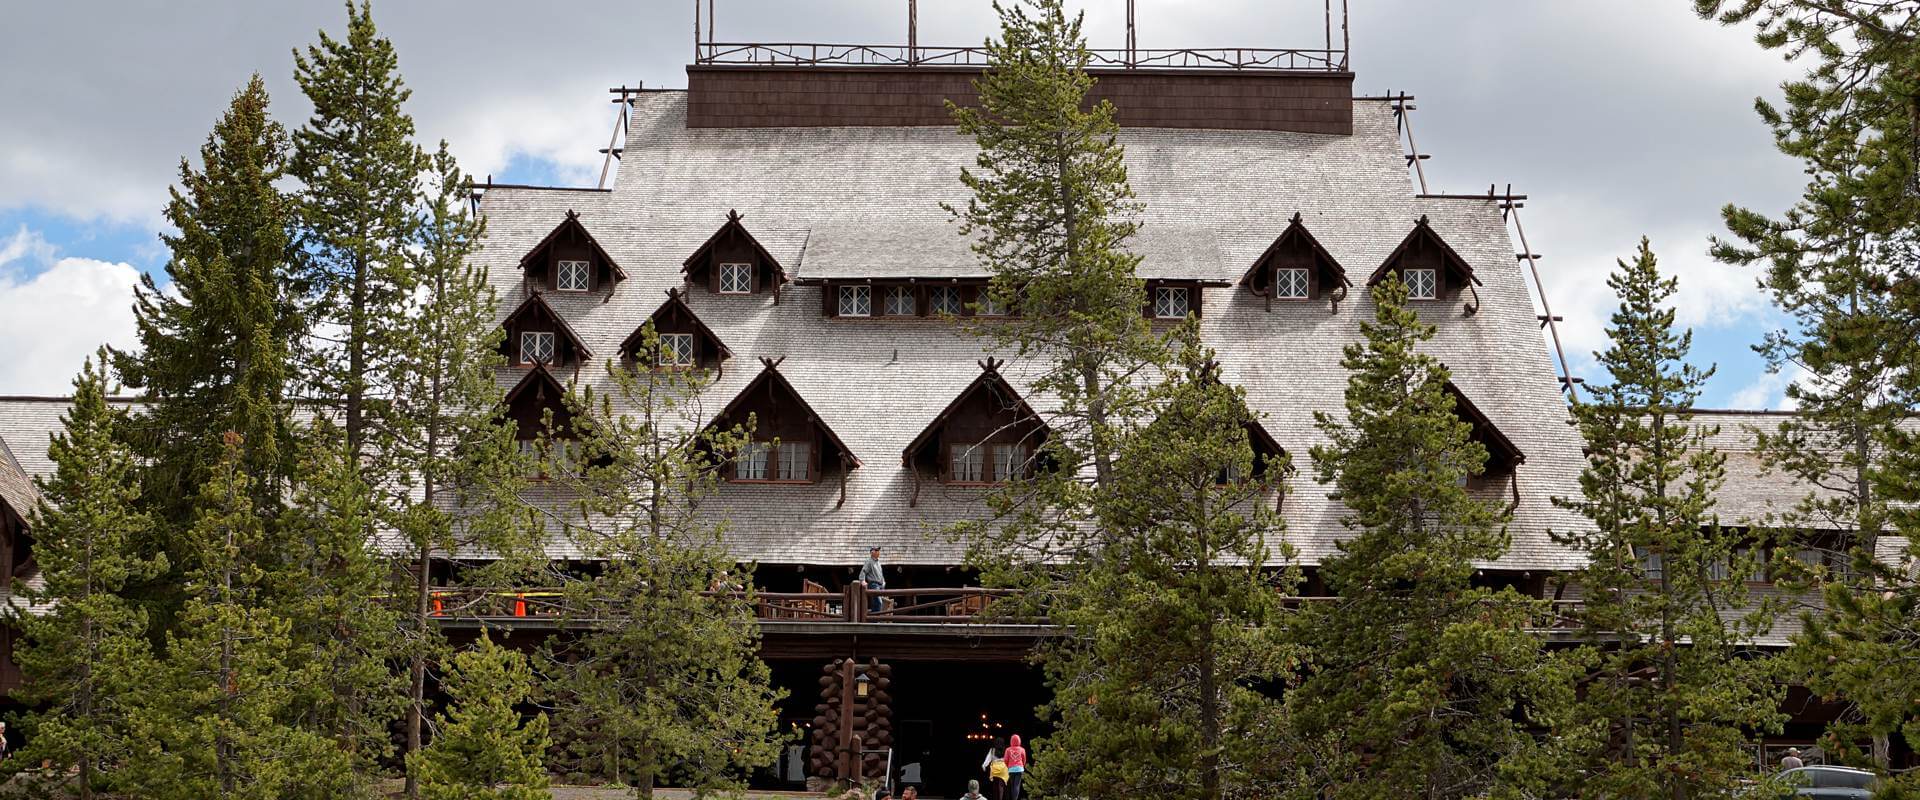 Old Faithful Inn, Lake Yellowstone Hotel und Roosevelt Lodge – Dining im Yellowstone